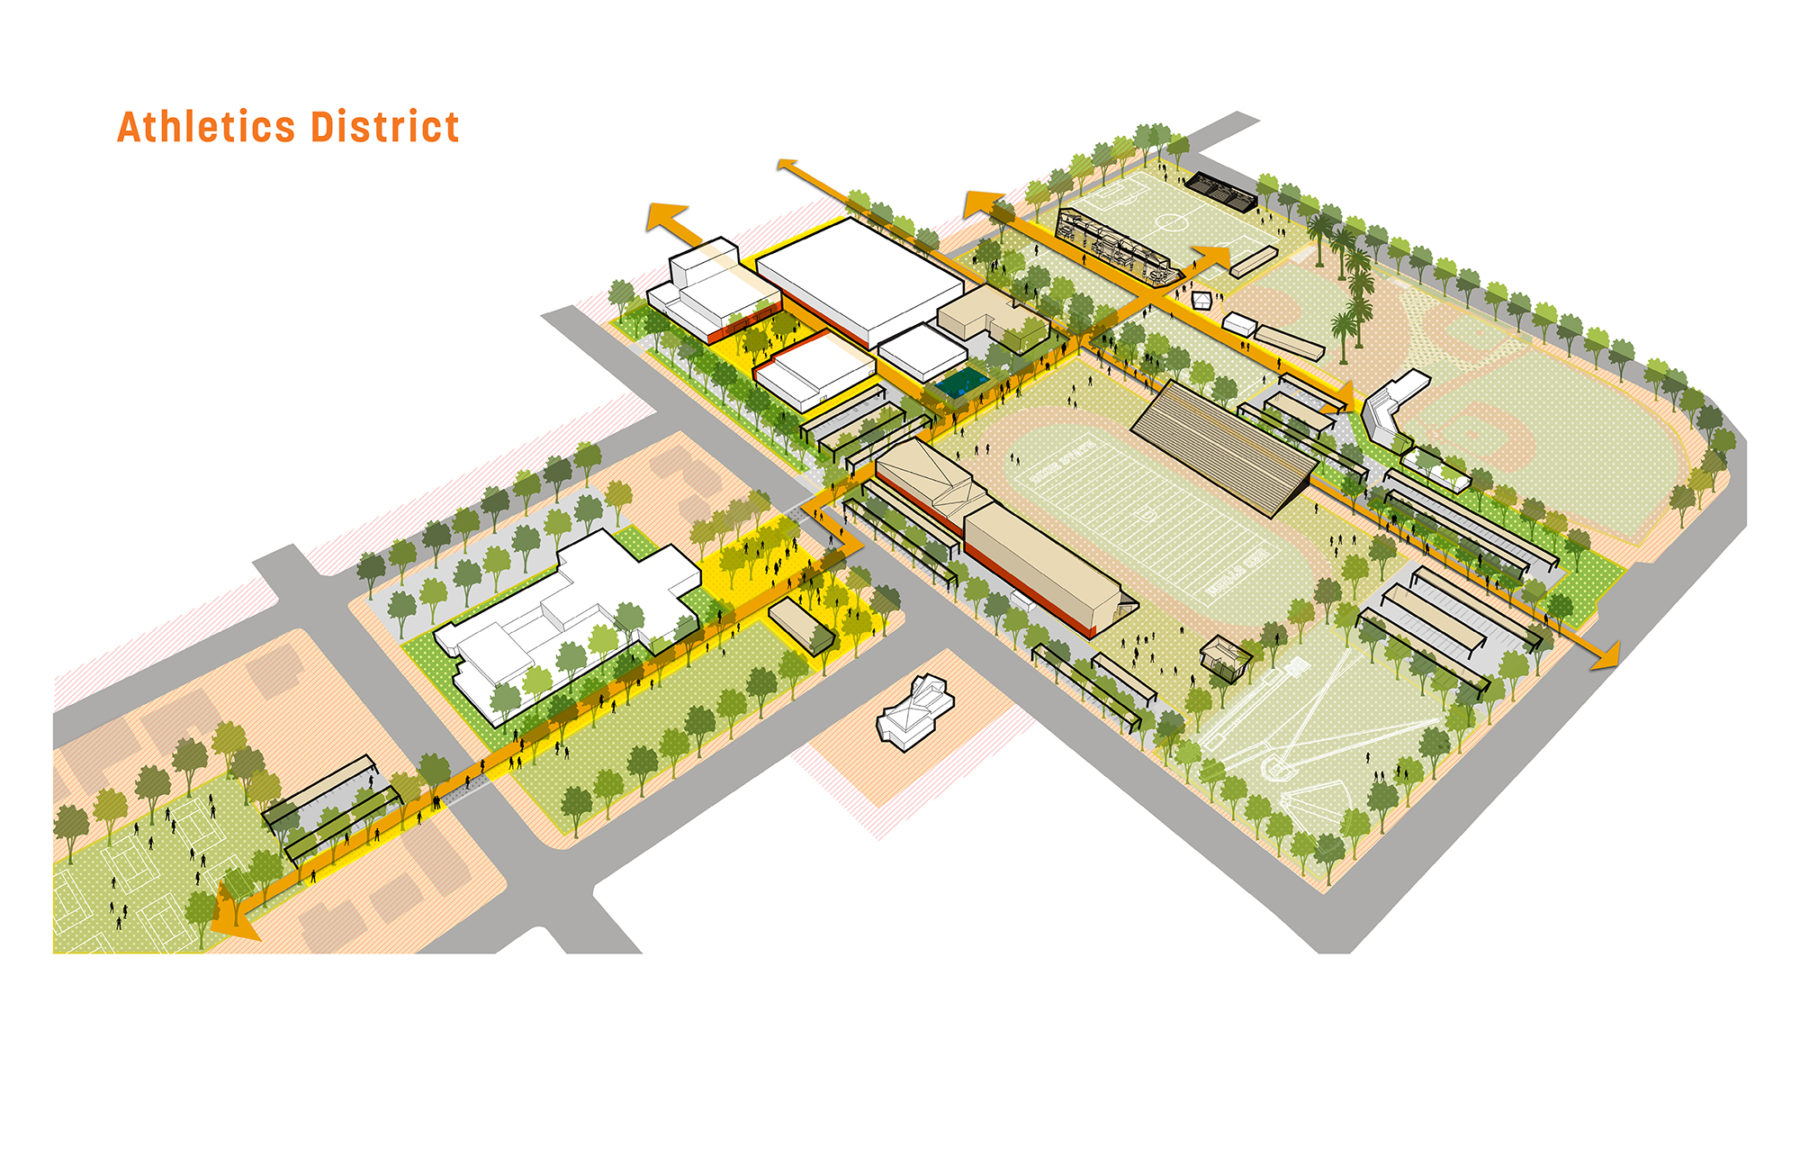 Athletics District site plan